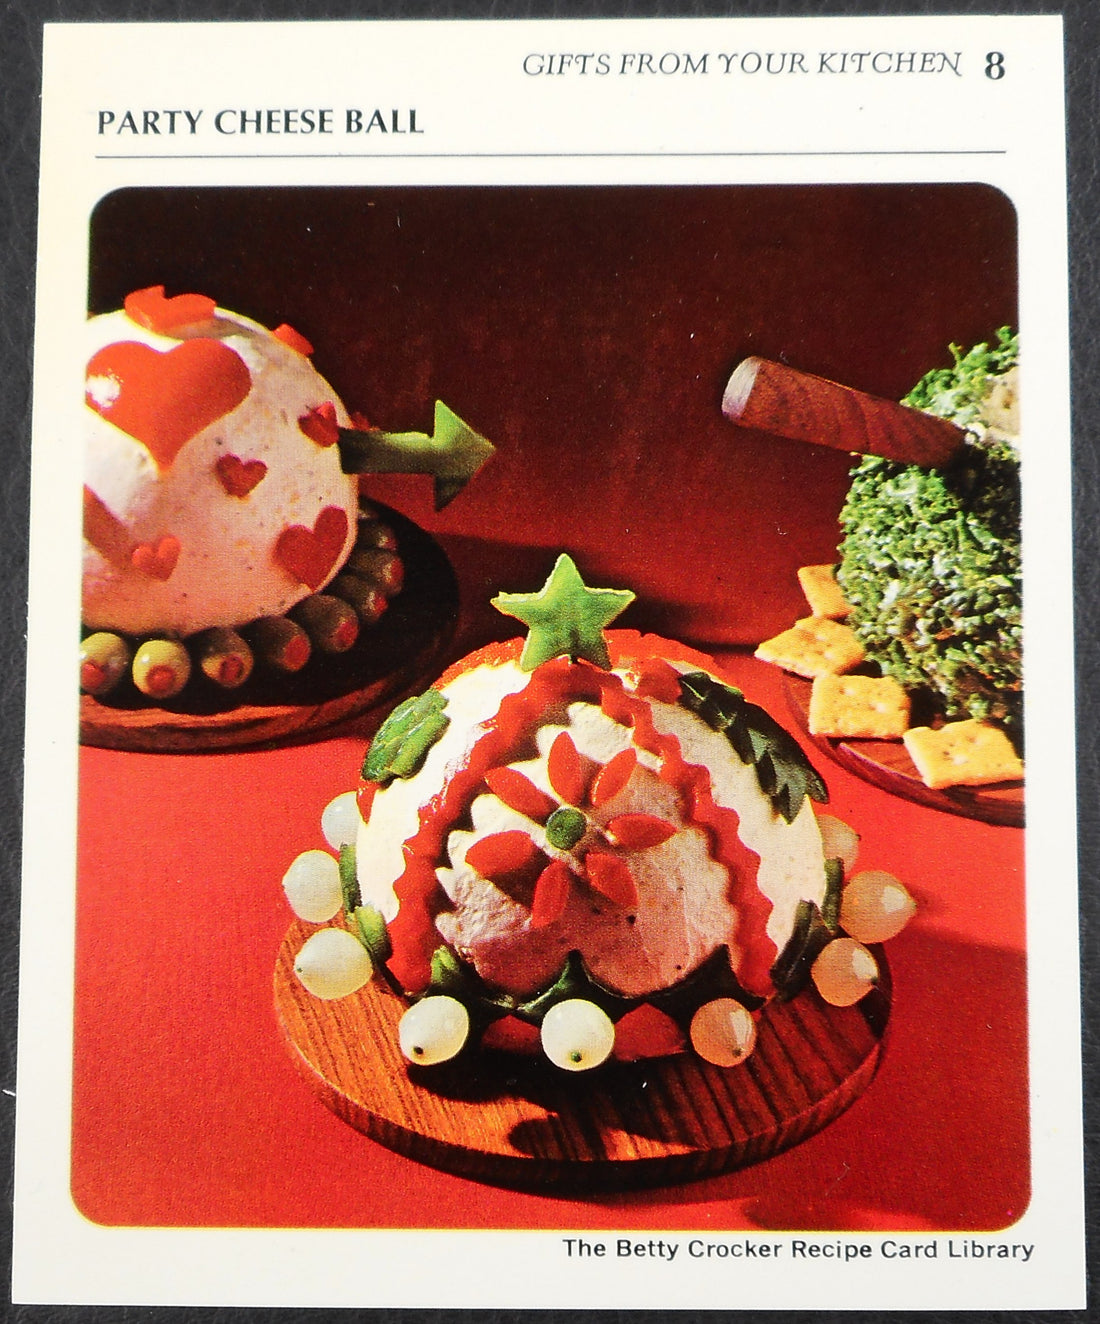 Vintage Cheesy Christmas Ball Party Food - 1971 Betty Crocker Recipe Card